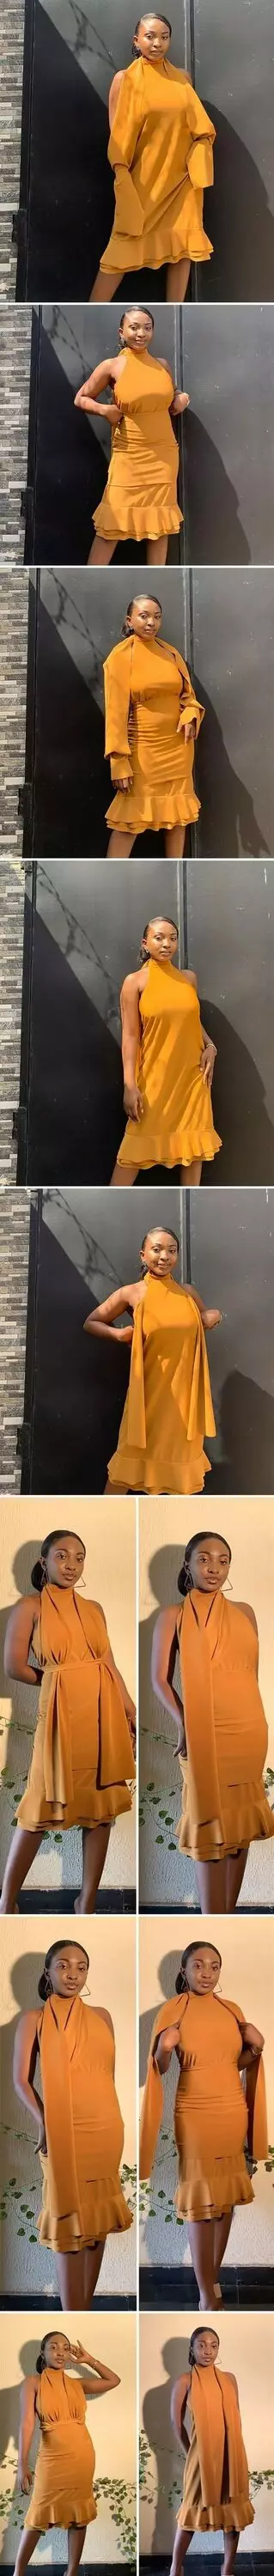 Geniale transformator kjoler fra Oyinda Akinfenva